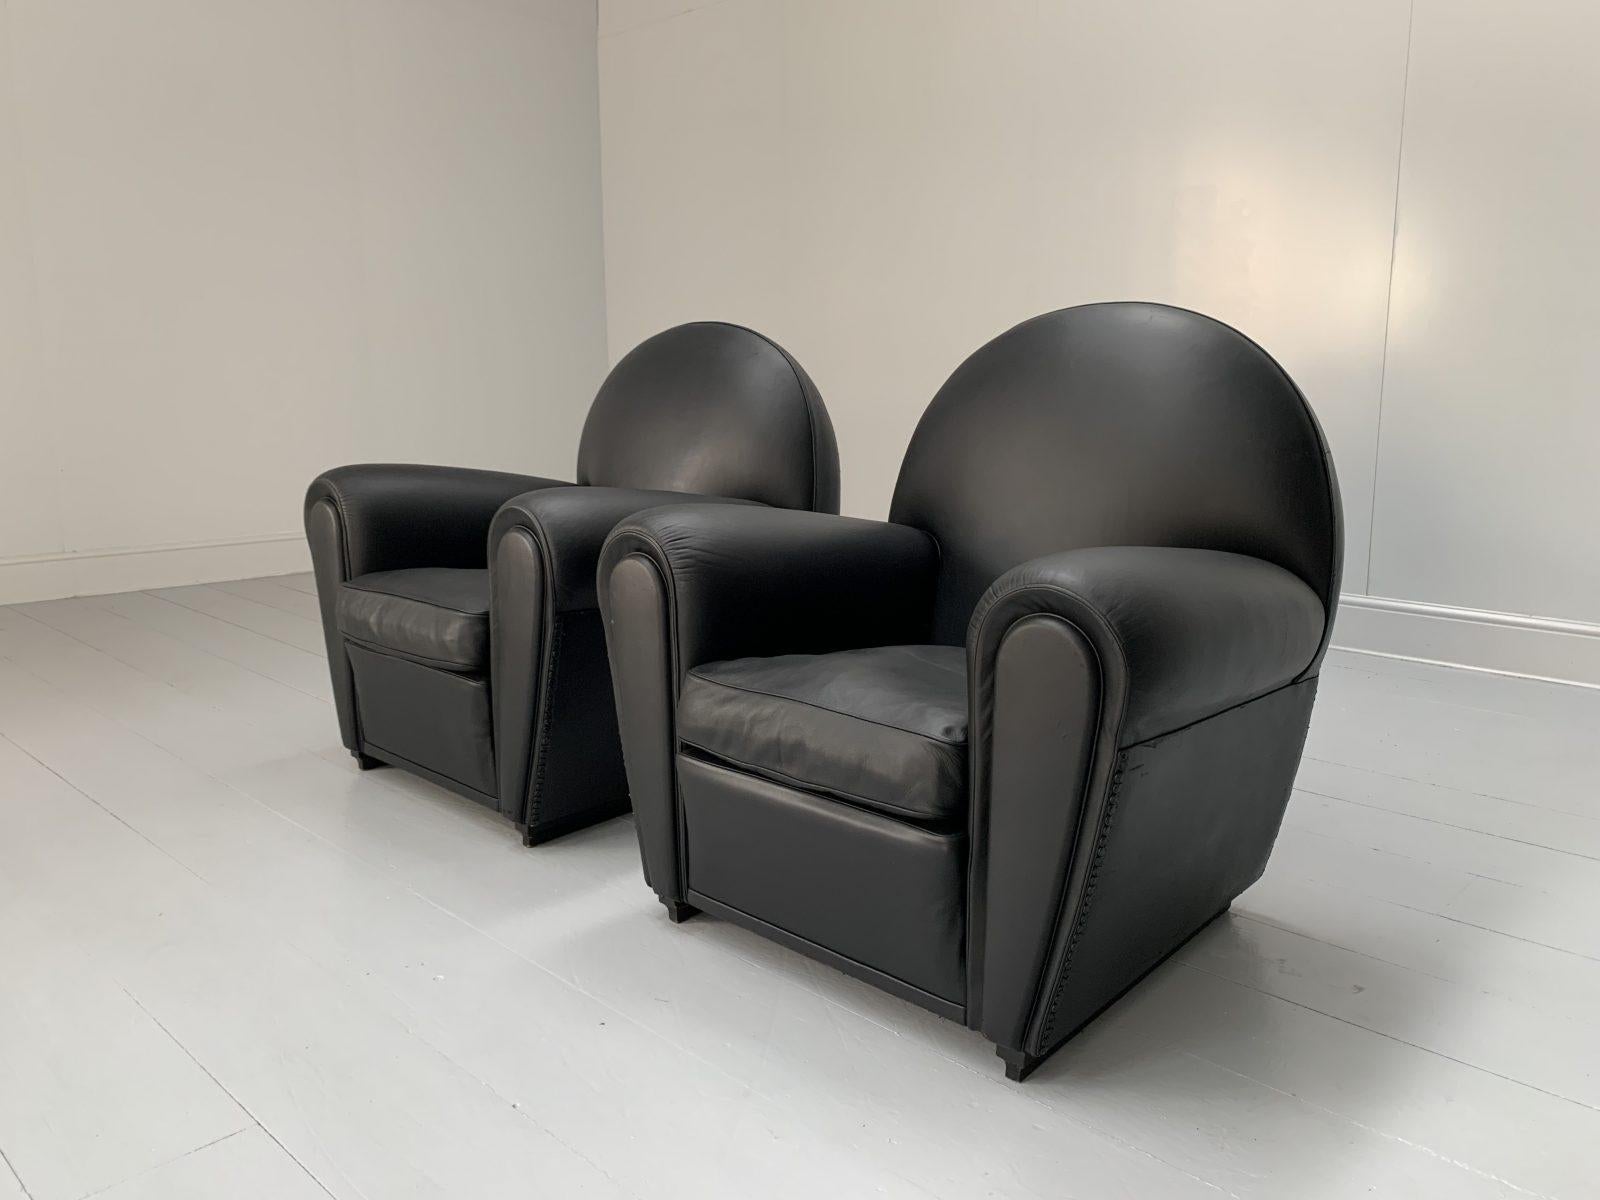 Contemporary Pair of Poltrona Frau “Vanity Fair” Armchairs – In “Pelle Frau” Black Leather For Sale